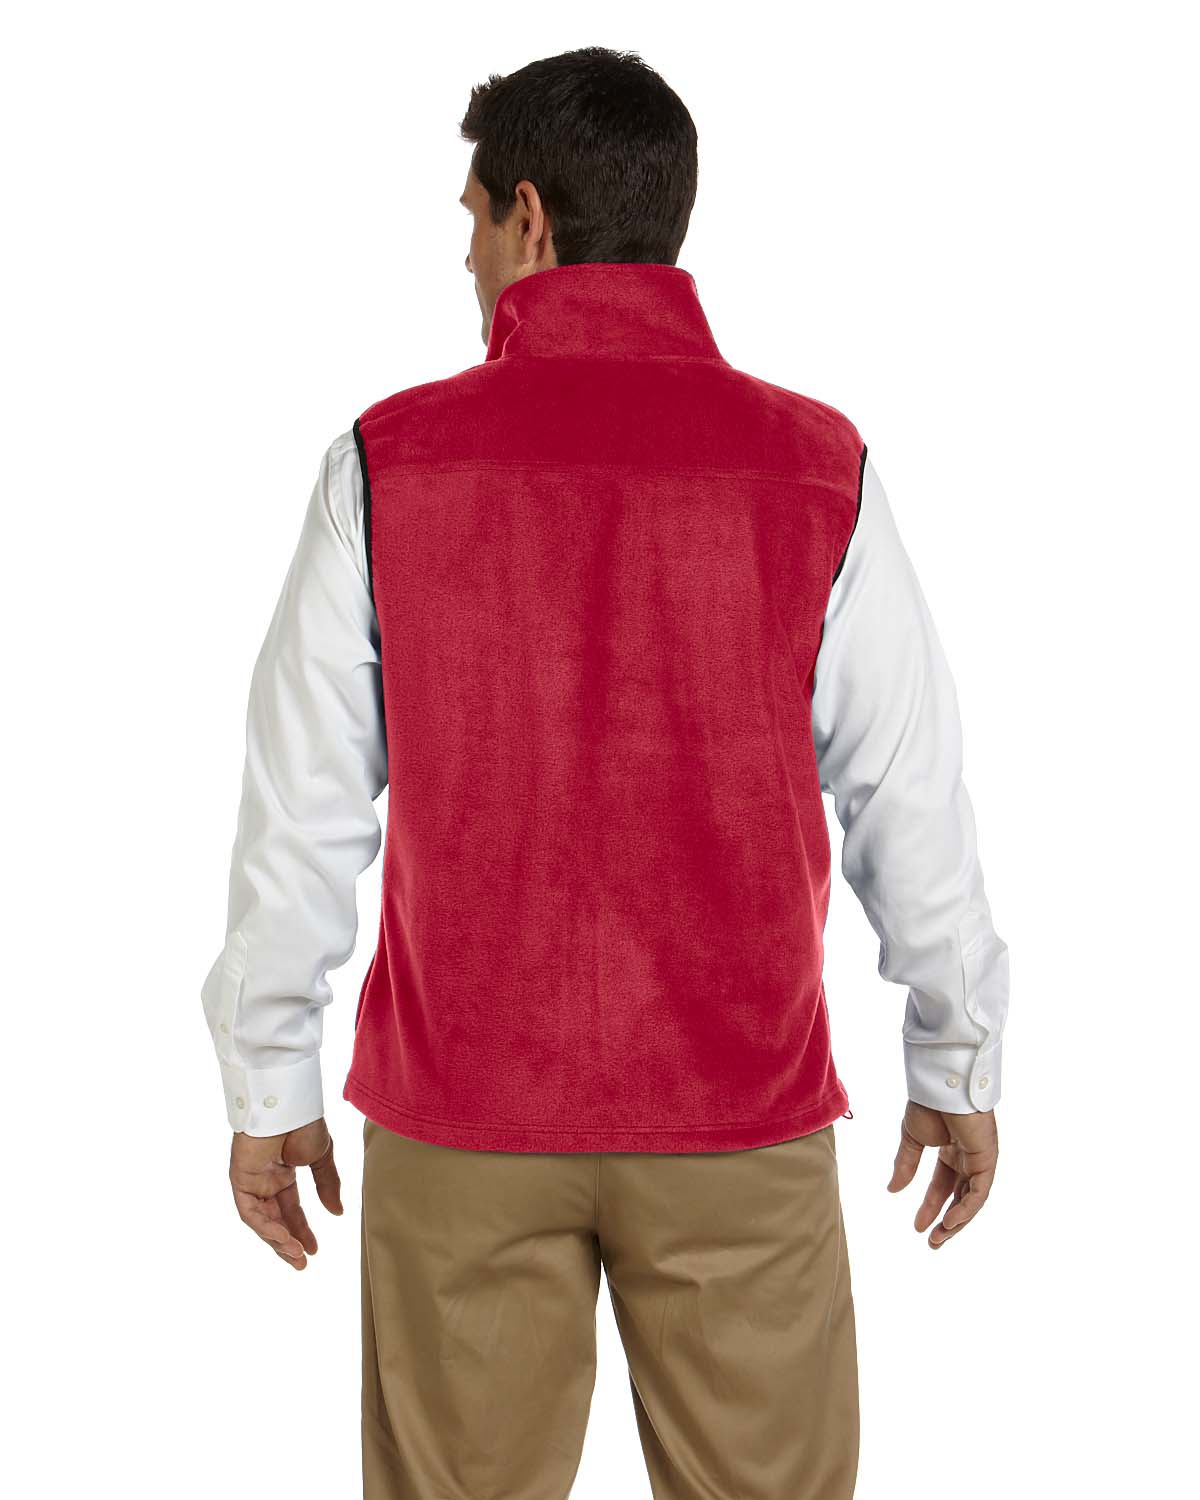 Harrition 8 oz Adult Promotional Fleece Vest